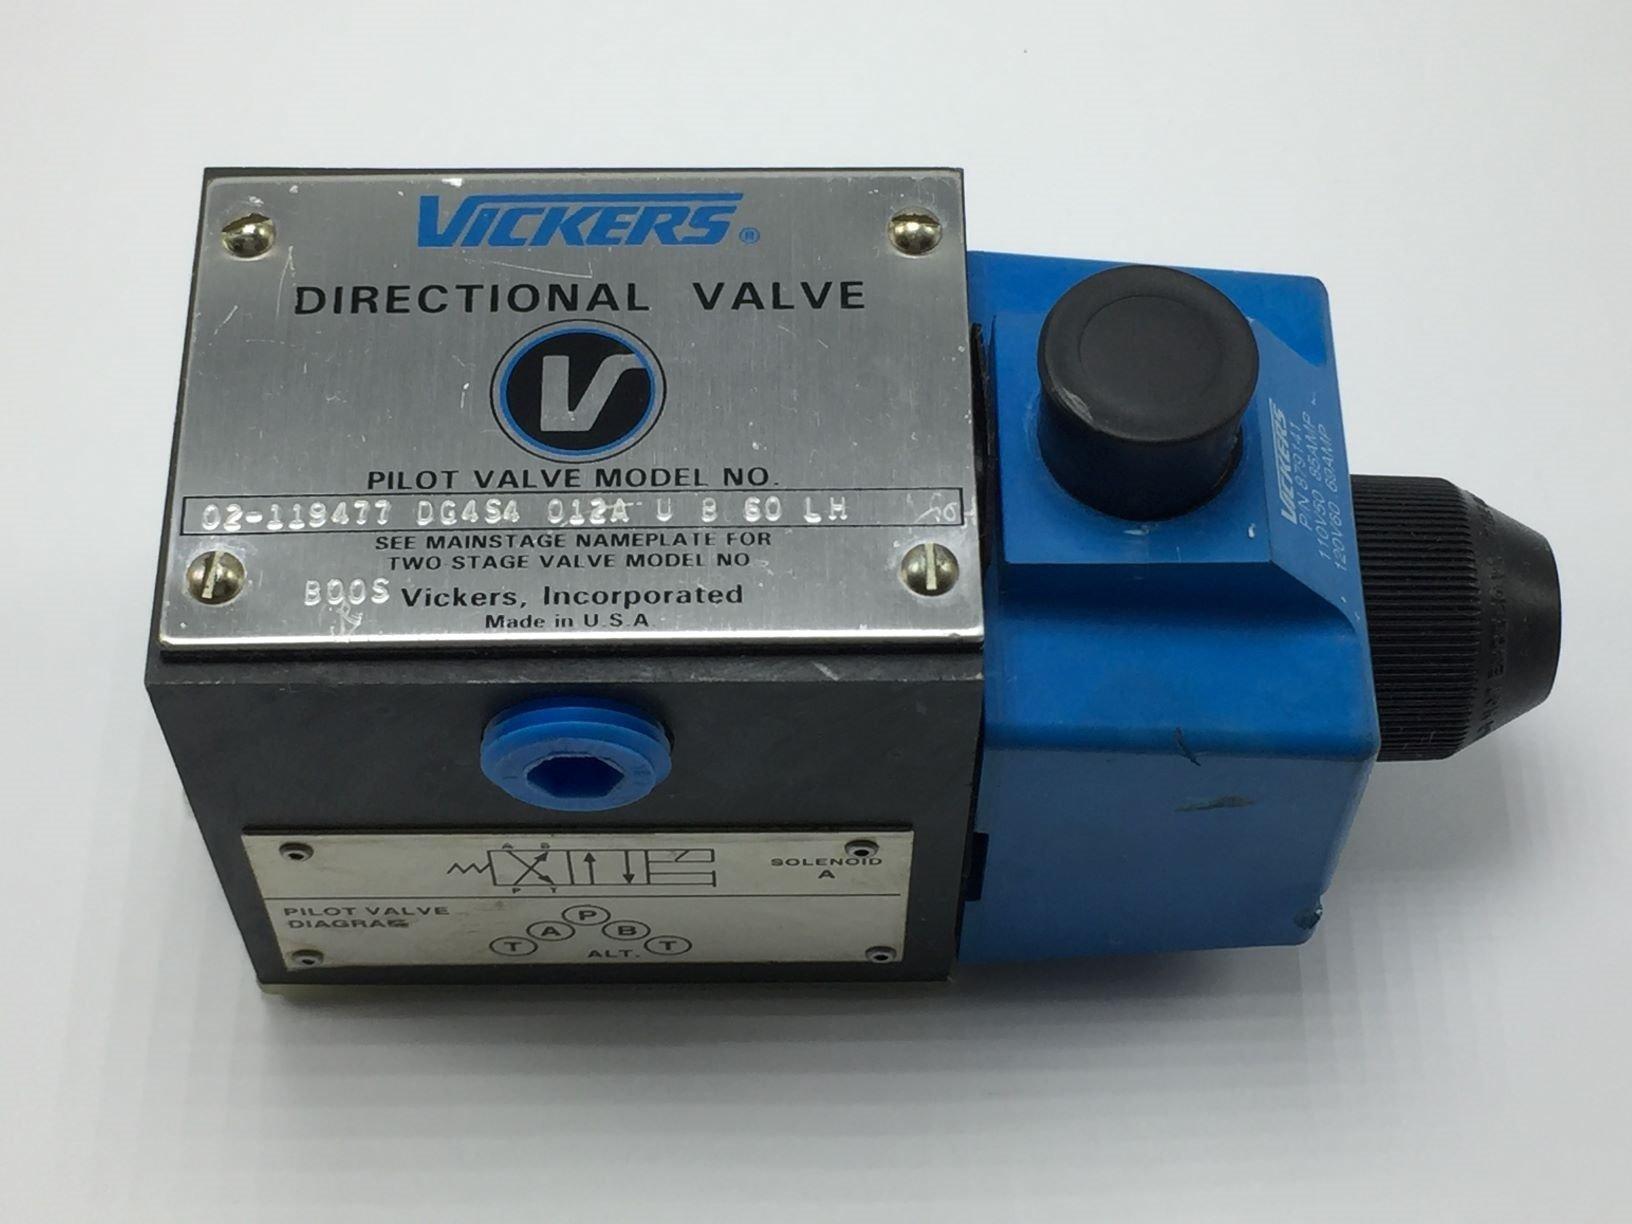 NEW Vickers 02-119477 Directional Valve 